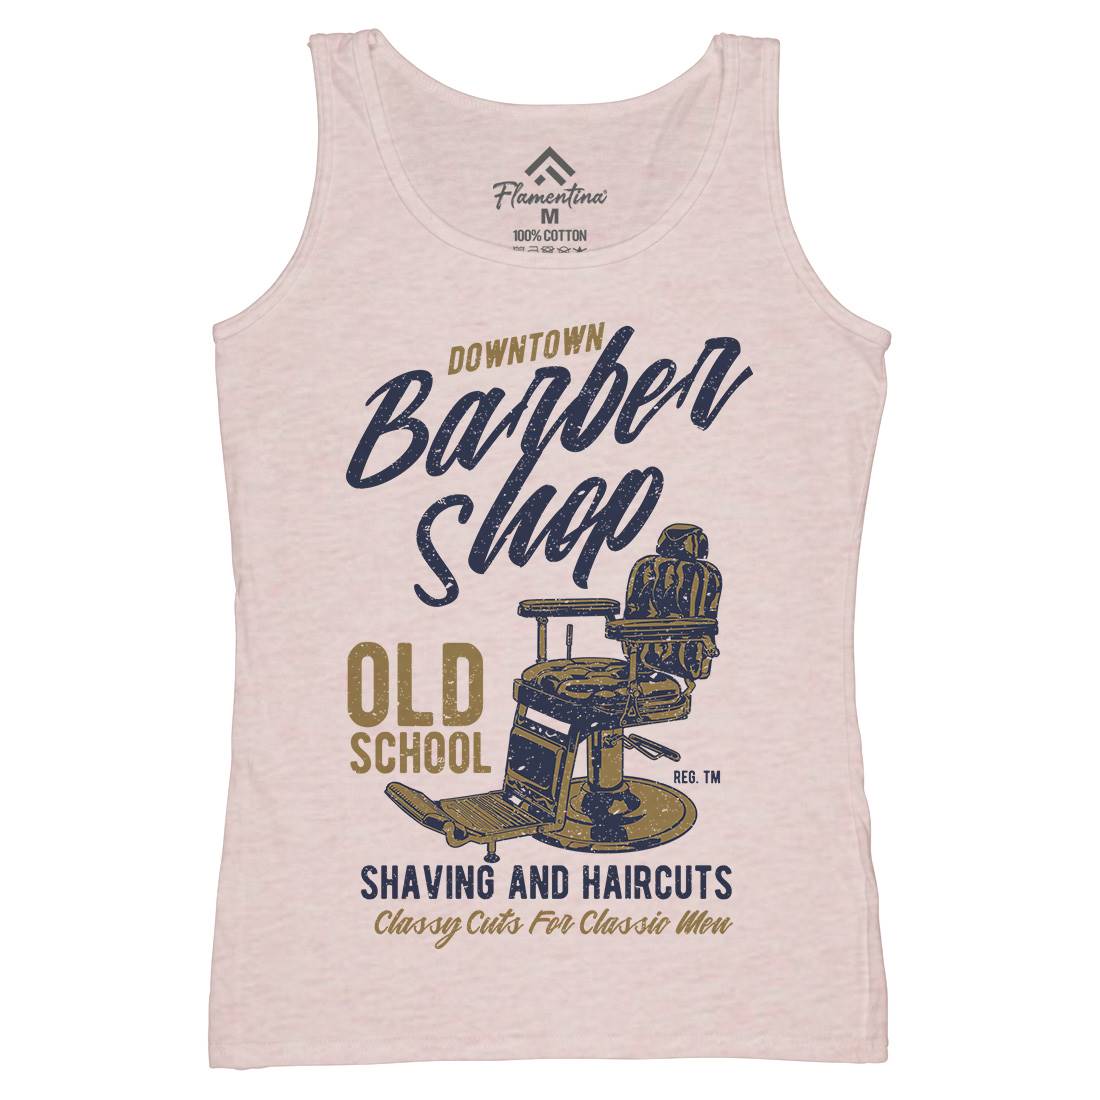 Downtown Barbershop Womens Organic Tank Top Vest Barber A646